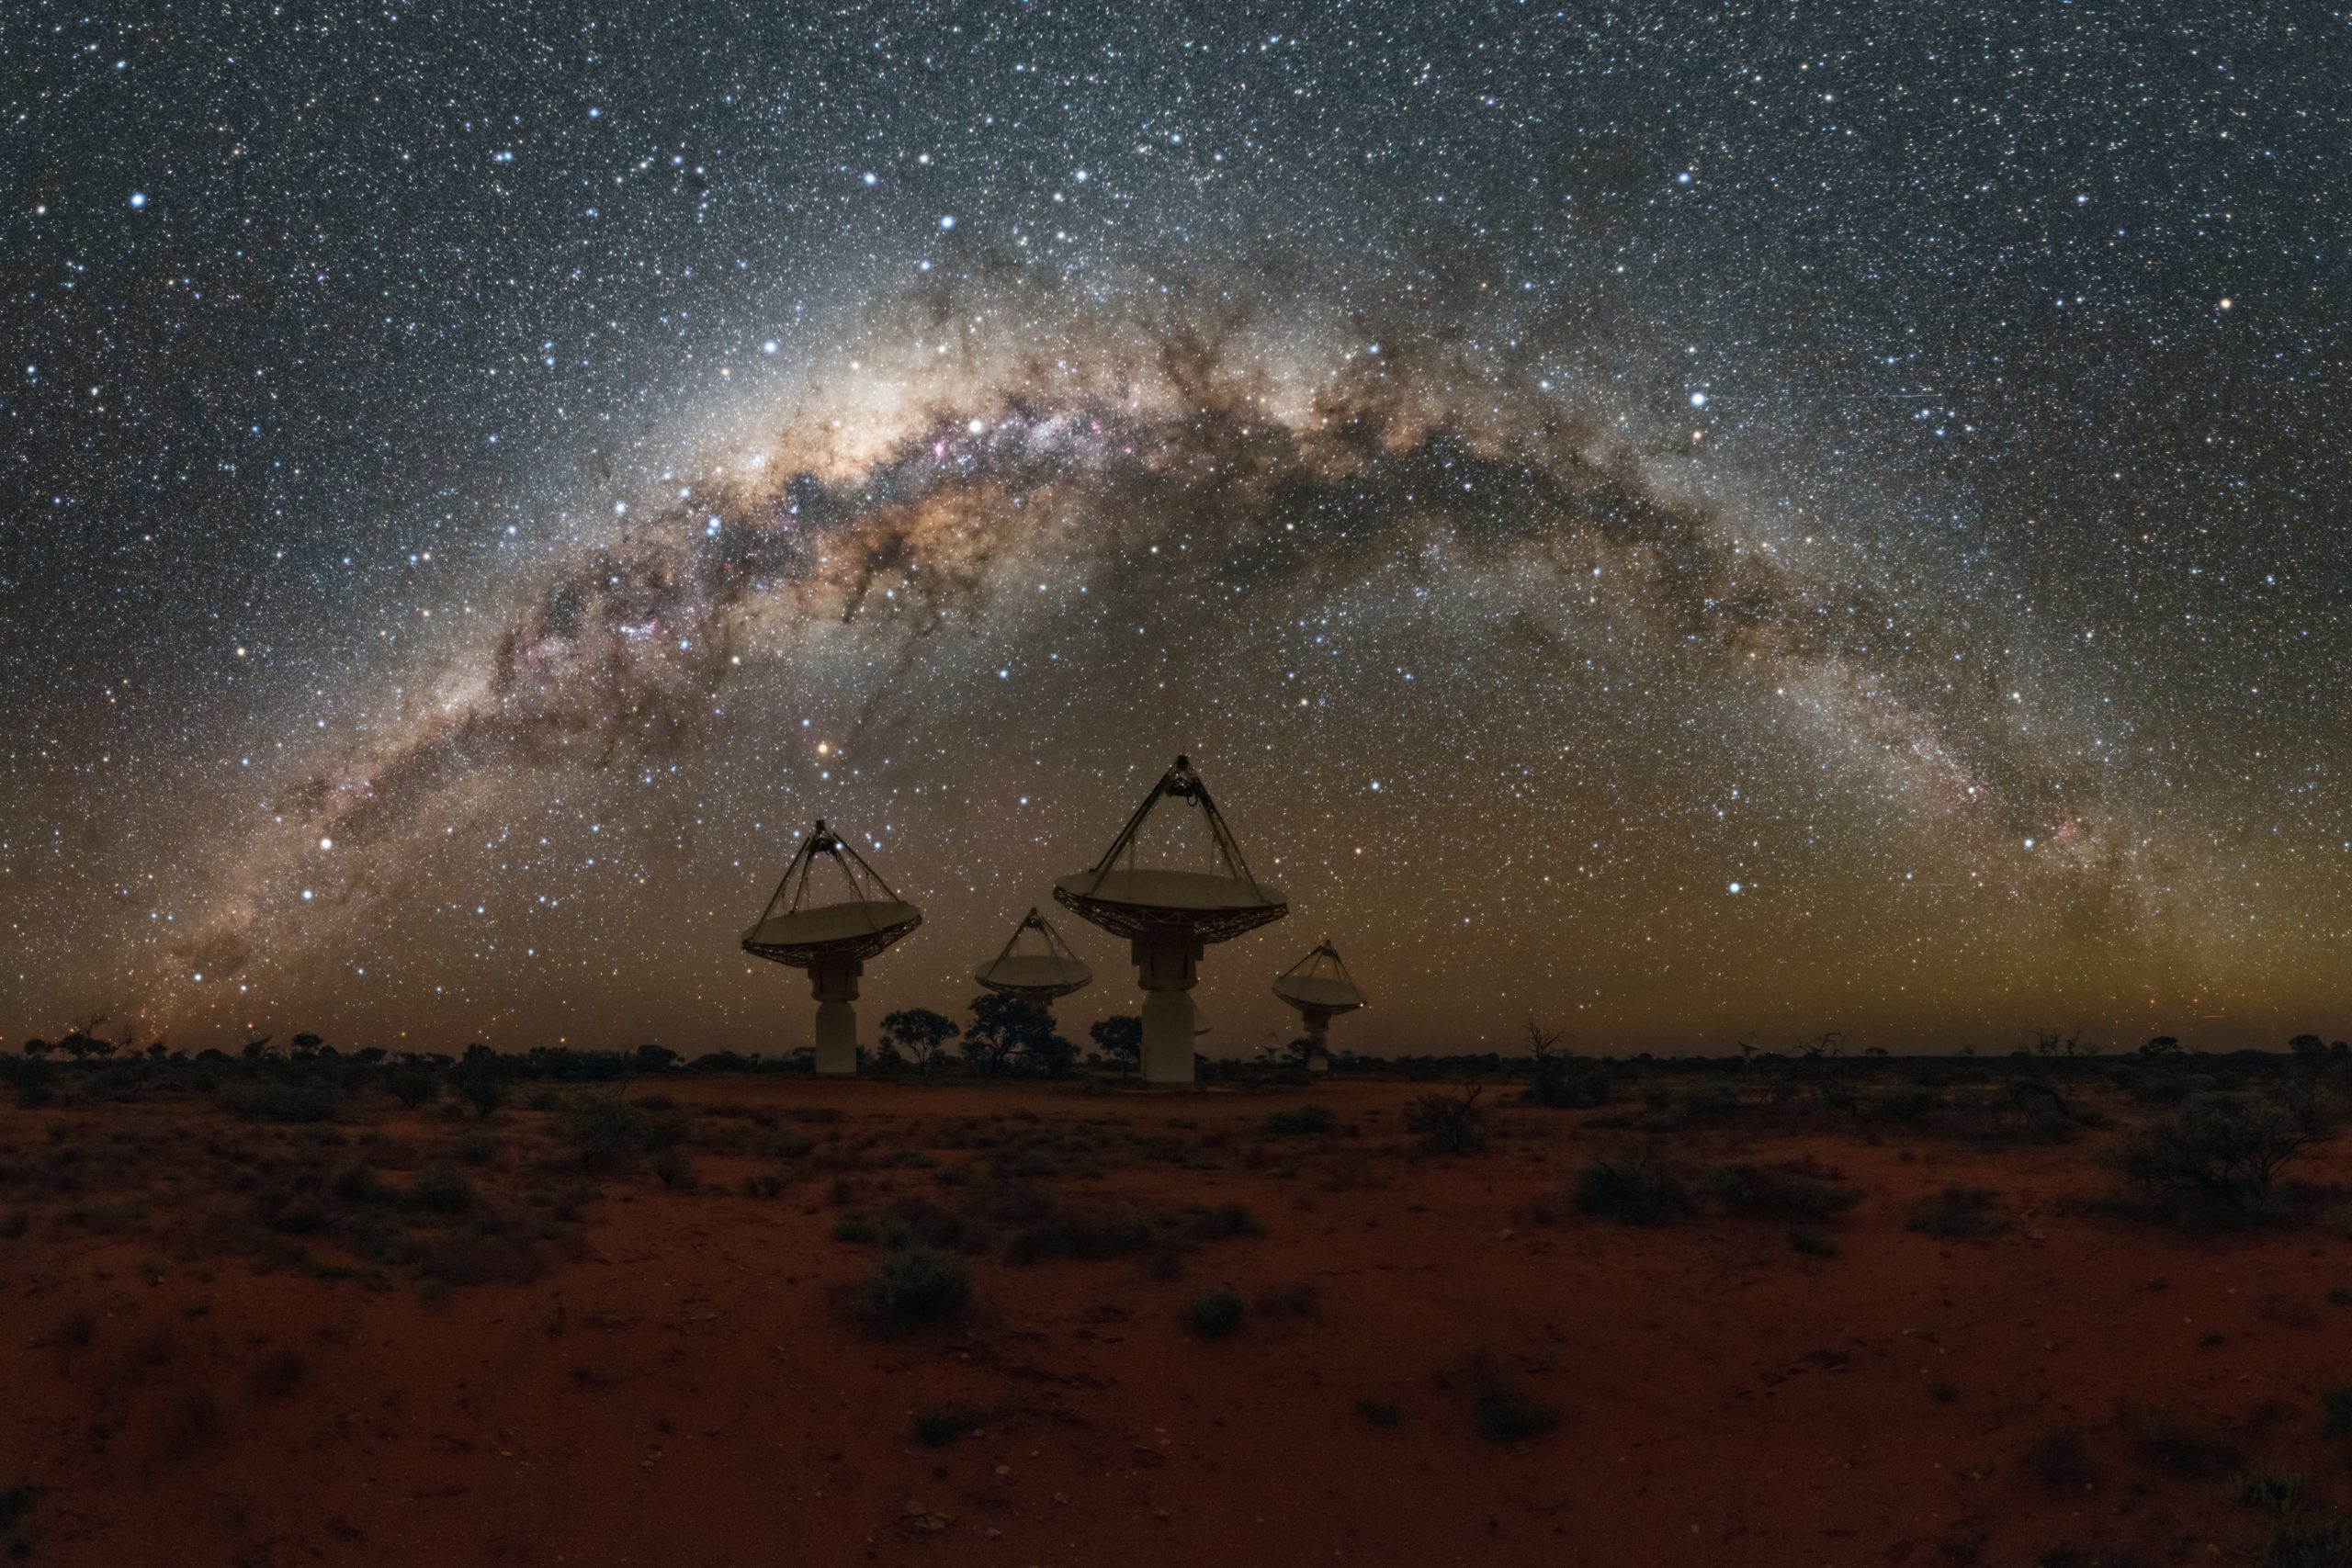 Radio telescope antennas in the desert beneath the Milky Way